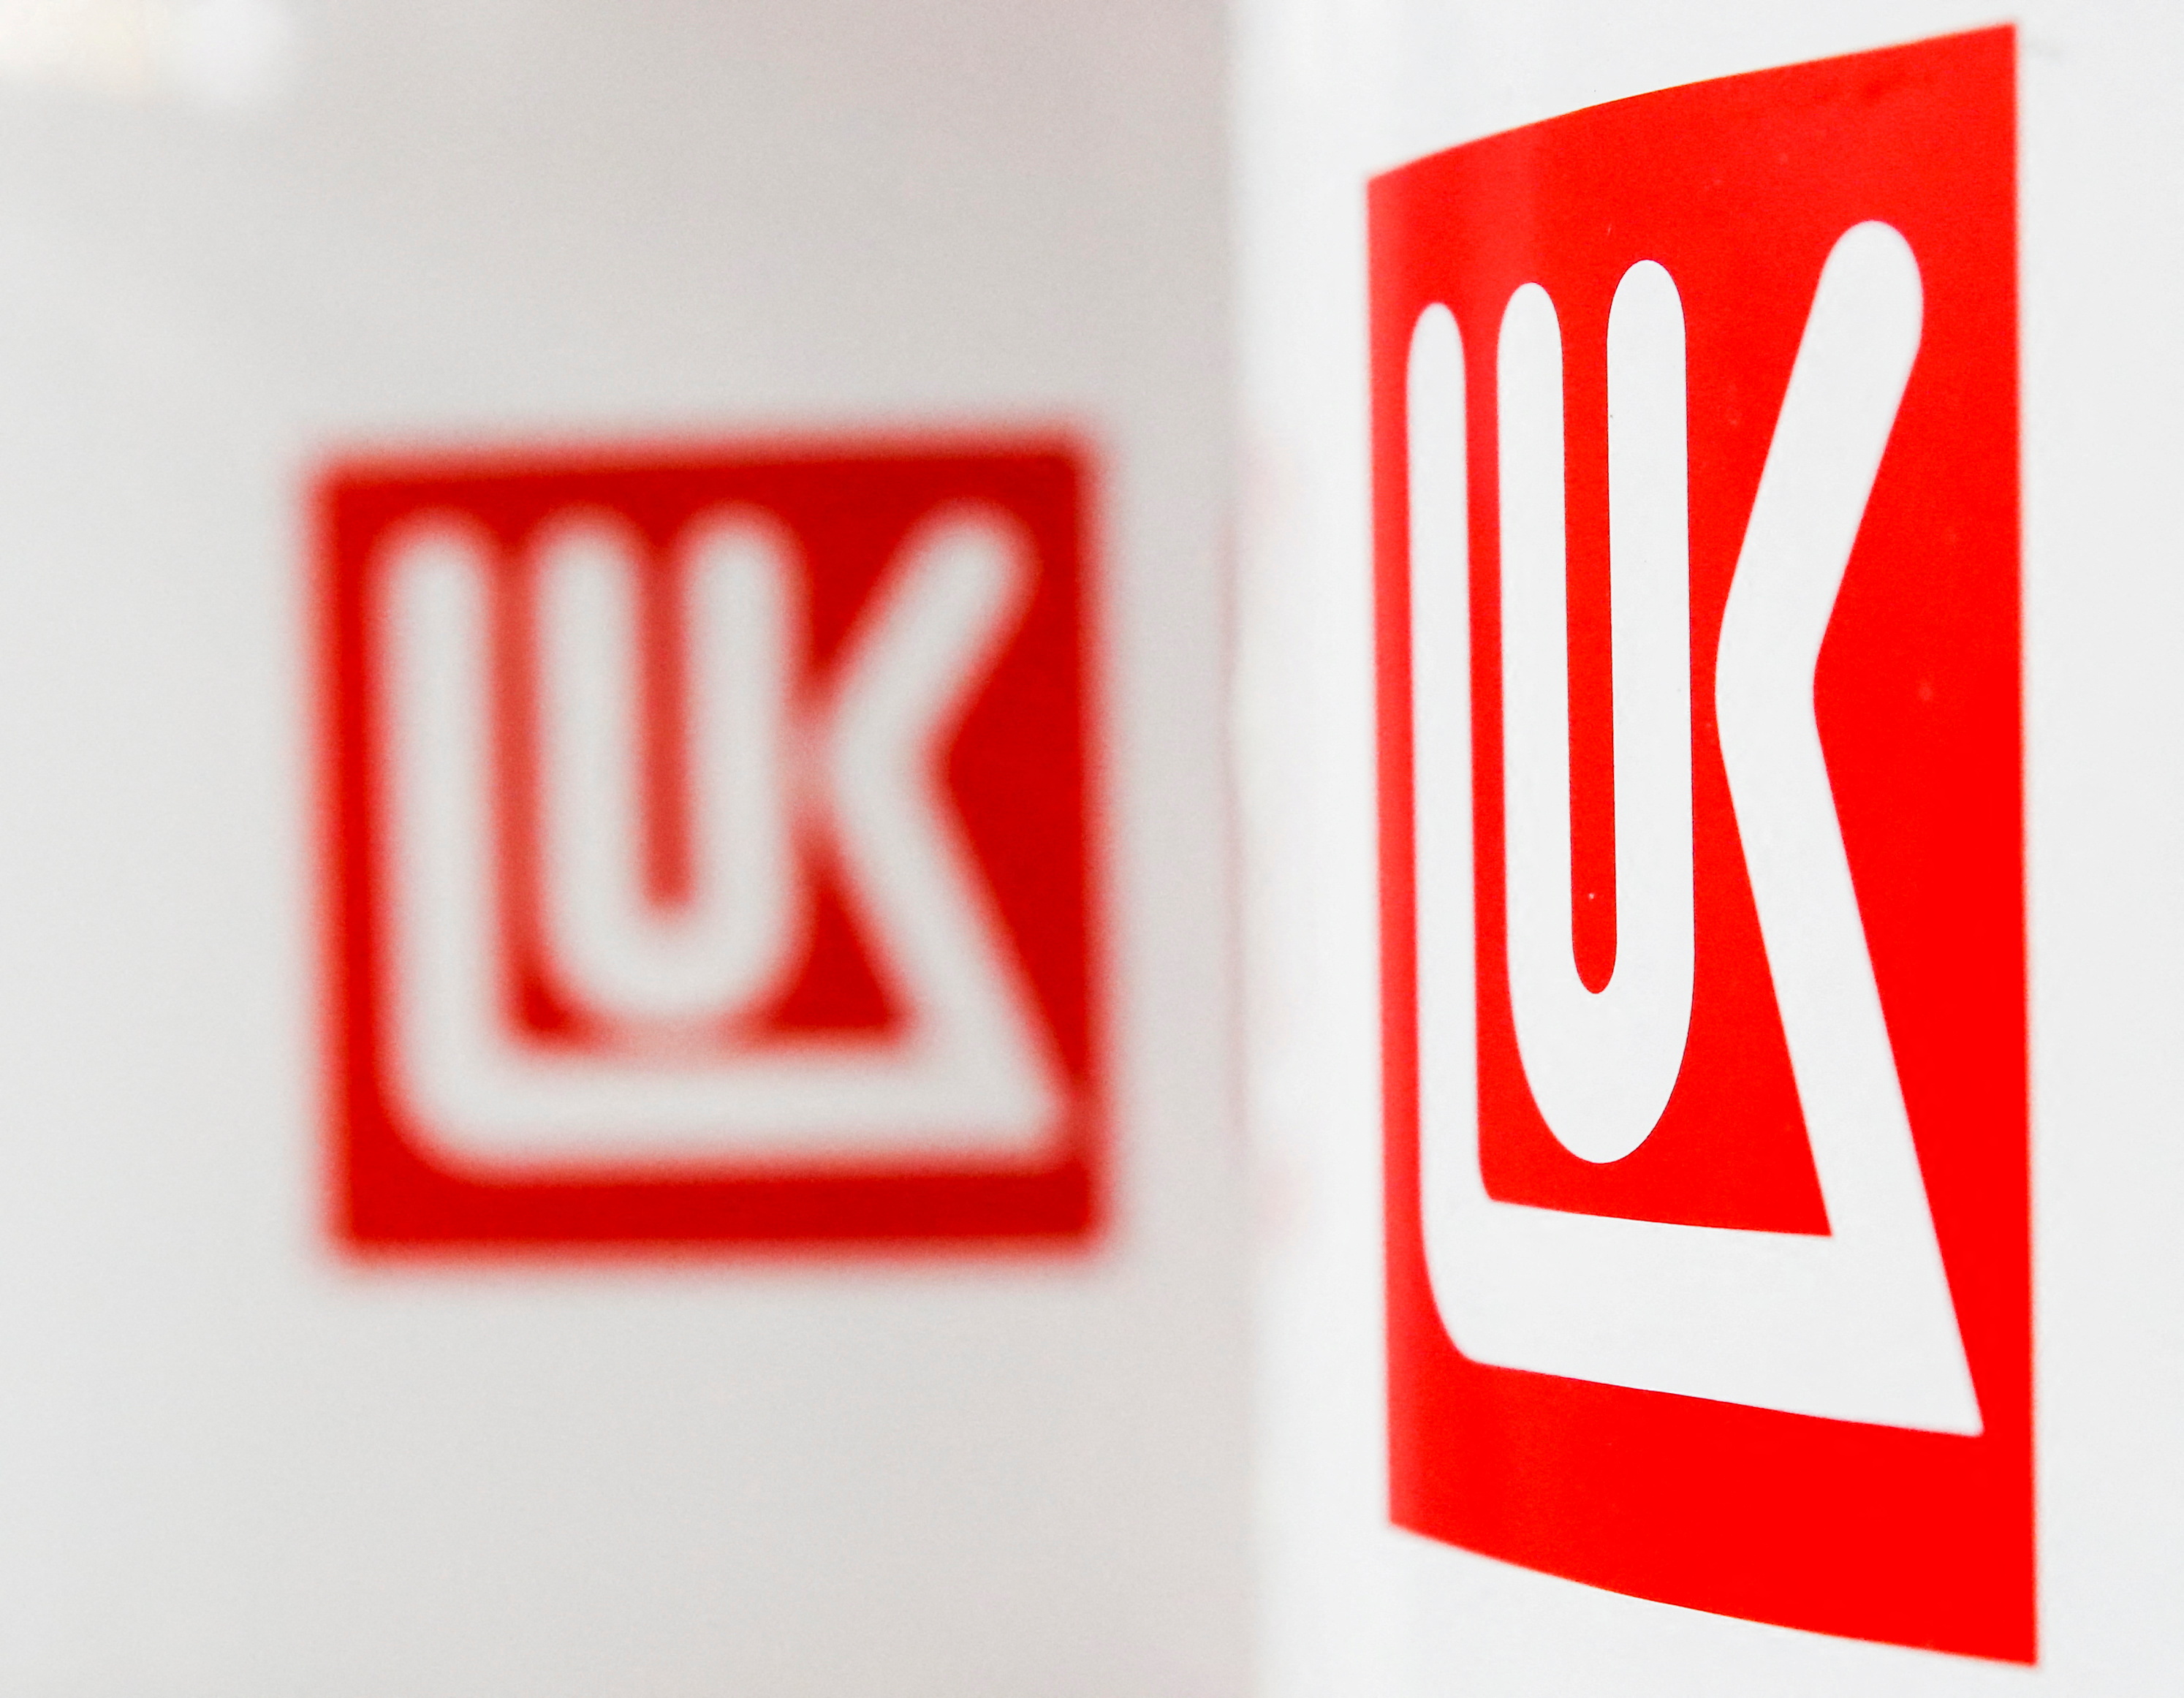 Lukoil logos are pictured at Gorkovsky Automobile Plant in Nizhny Novgorod